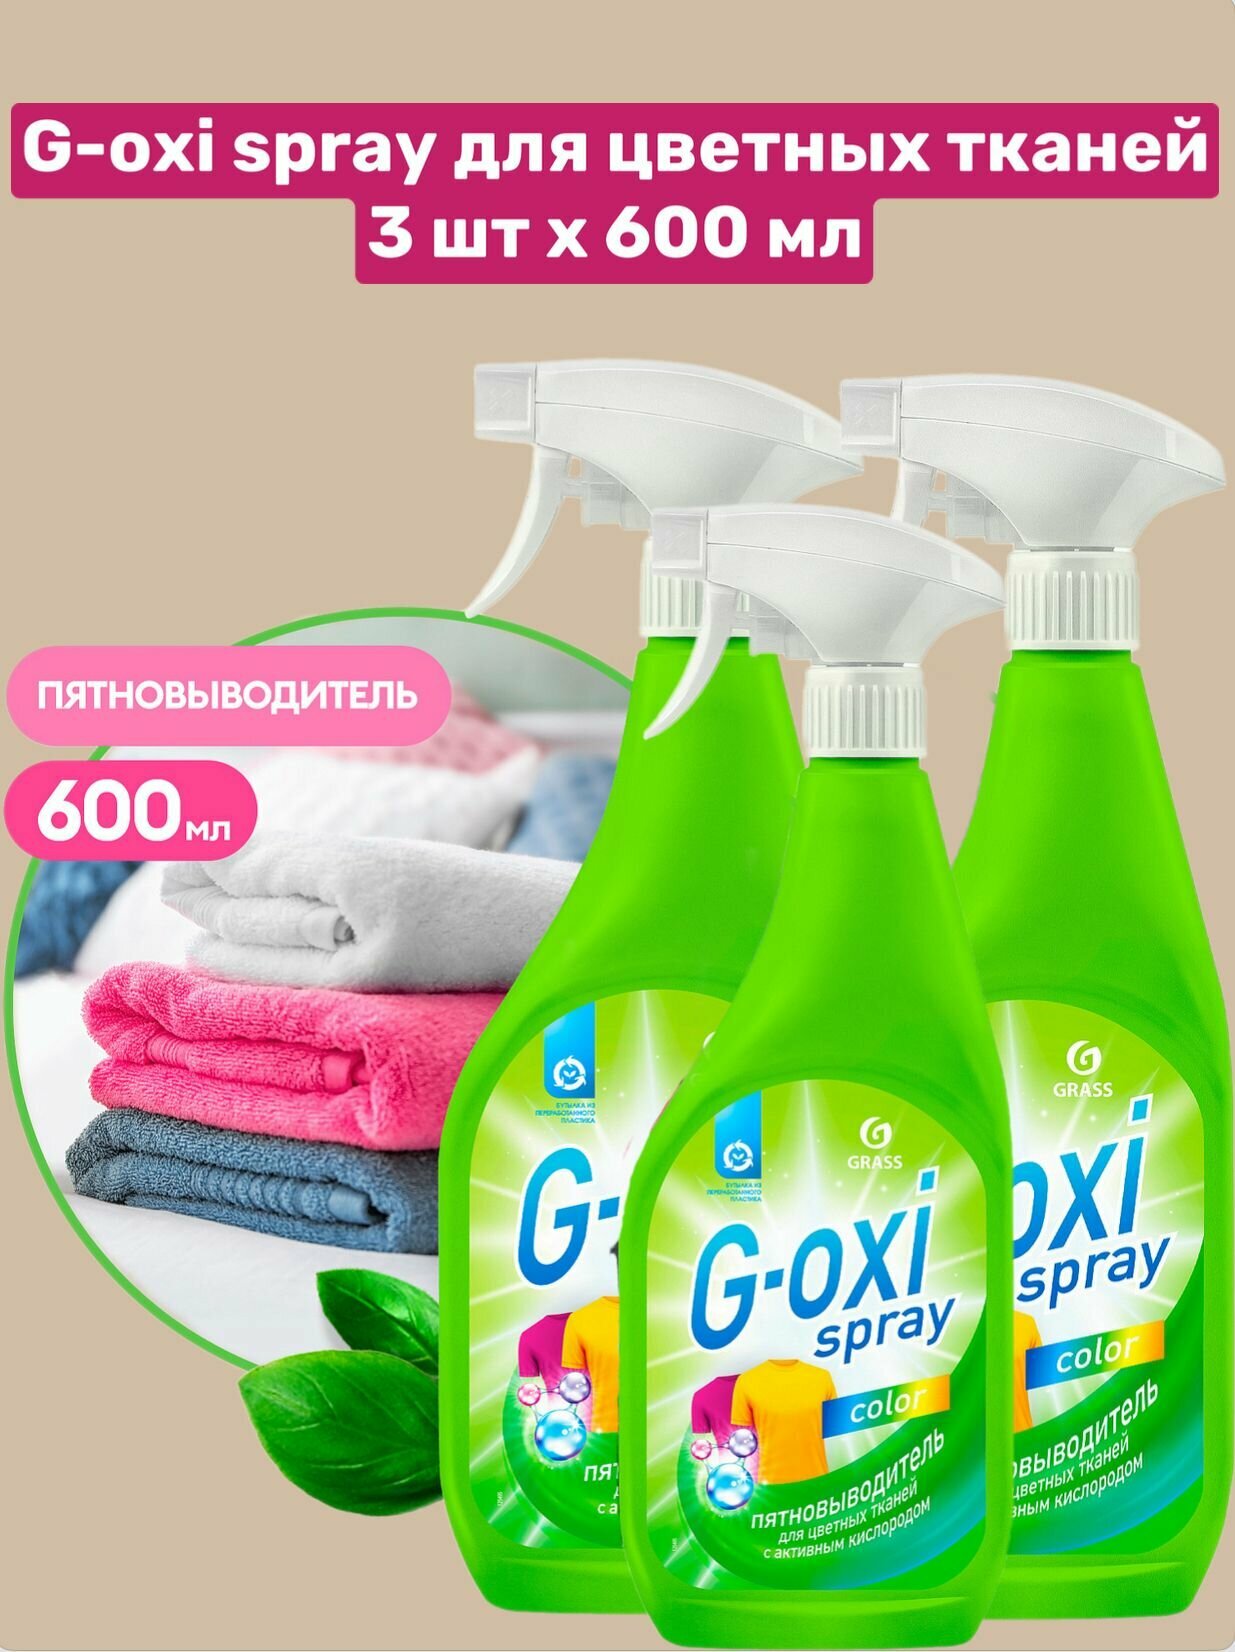 GRASS 3   G-Oxi spray       (  600 ), 3 